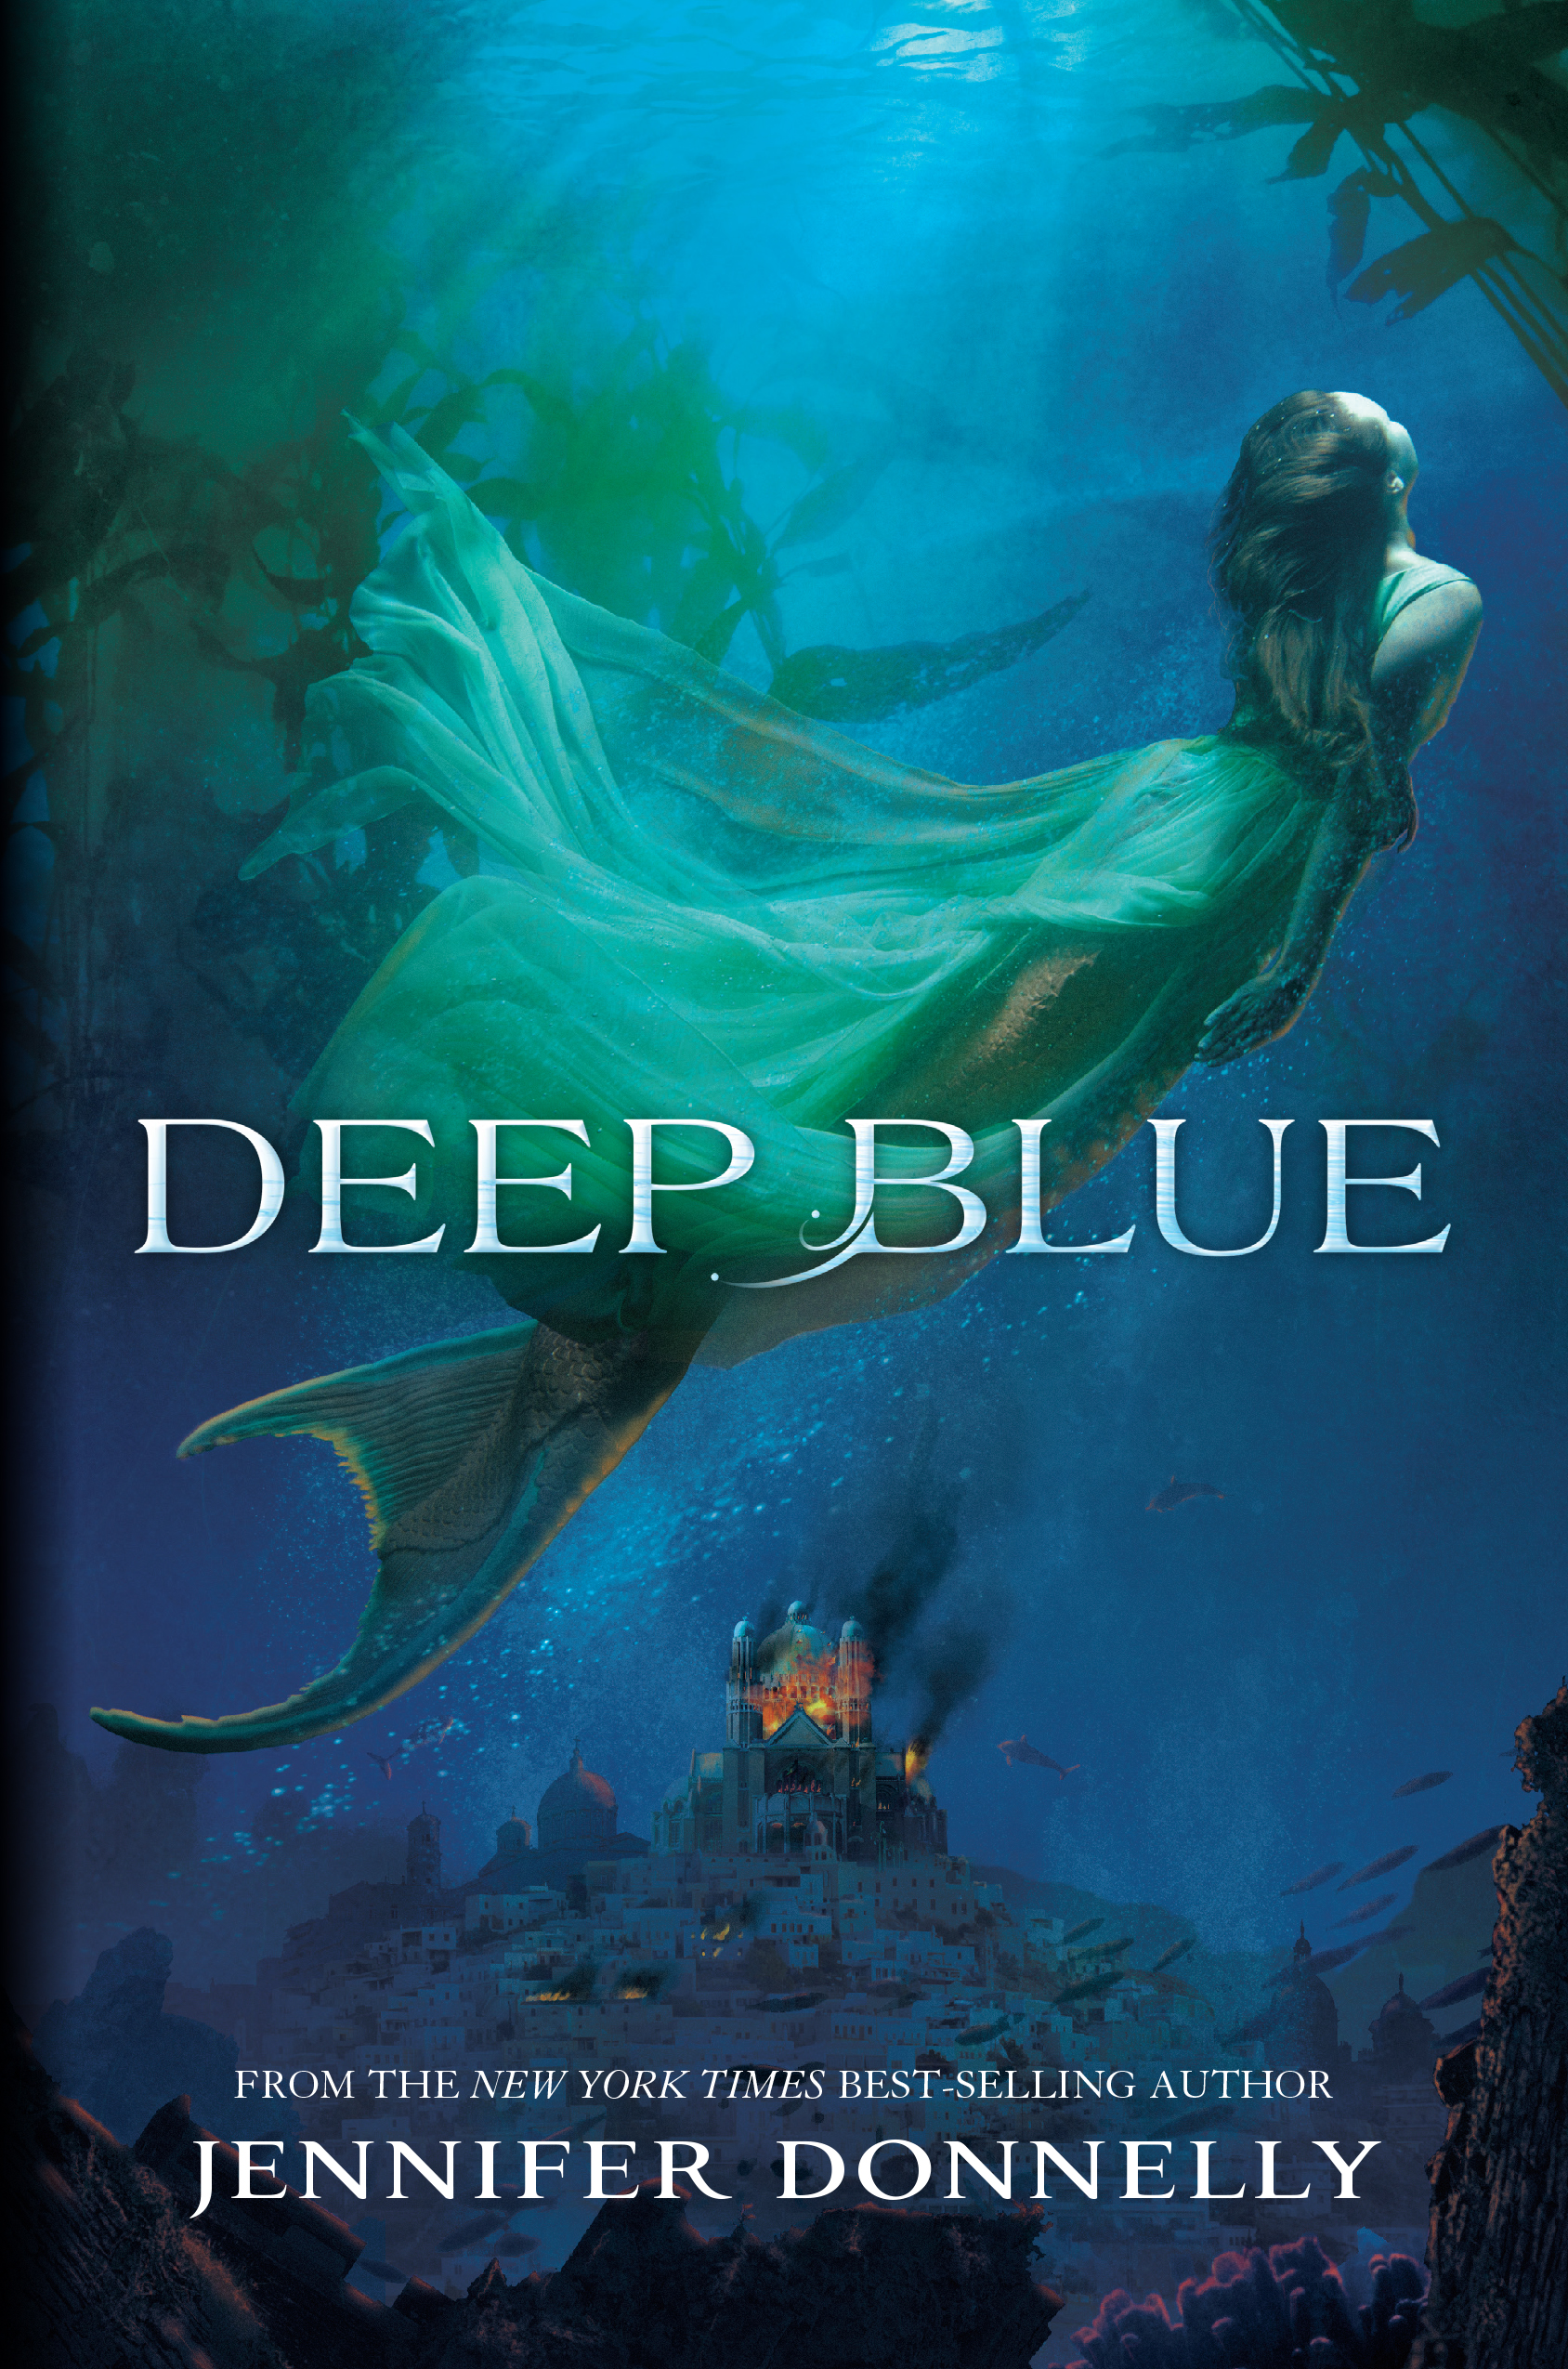 Blog Tour: Deep Blue